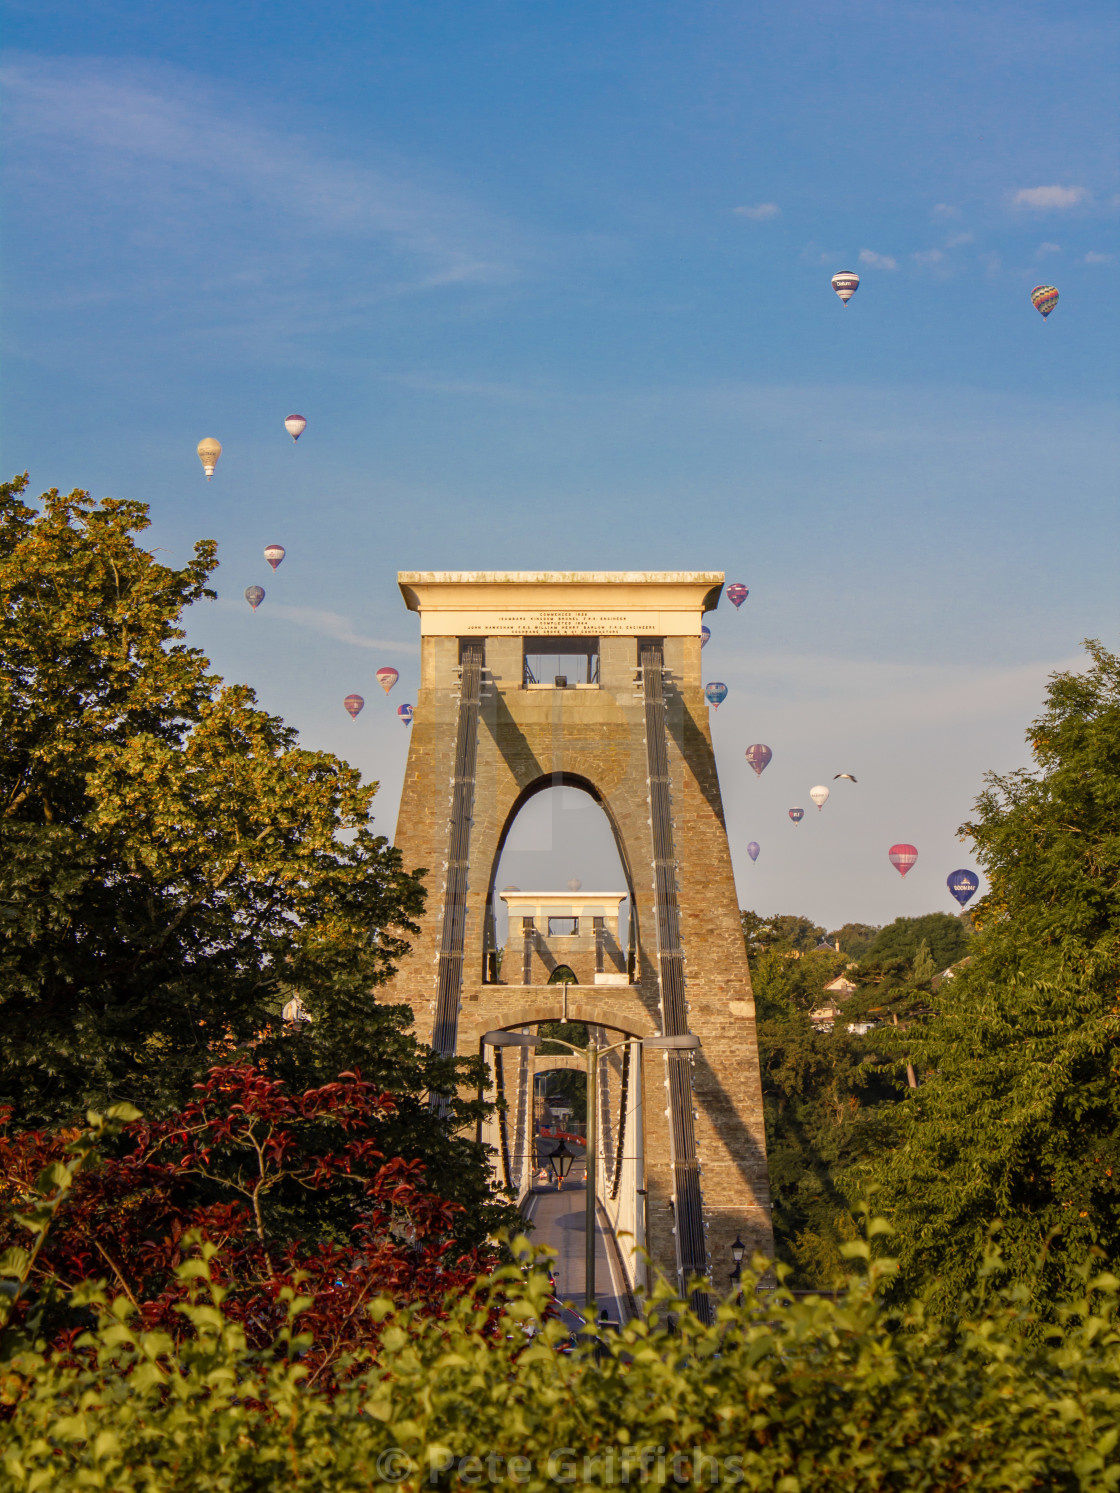 "Bristol Balloons" stock image